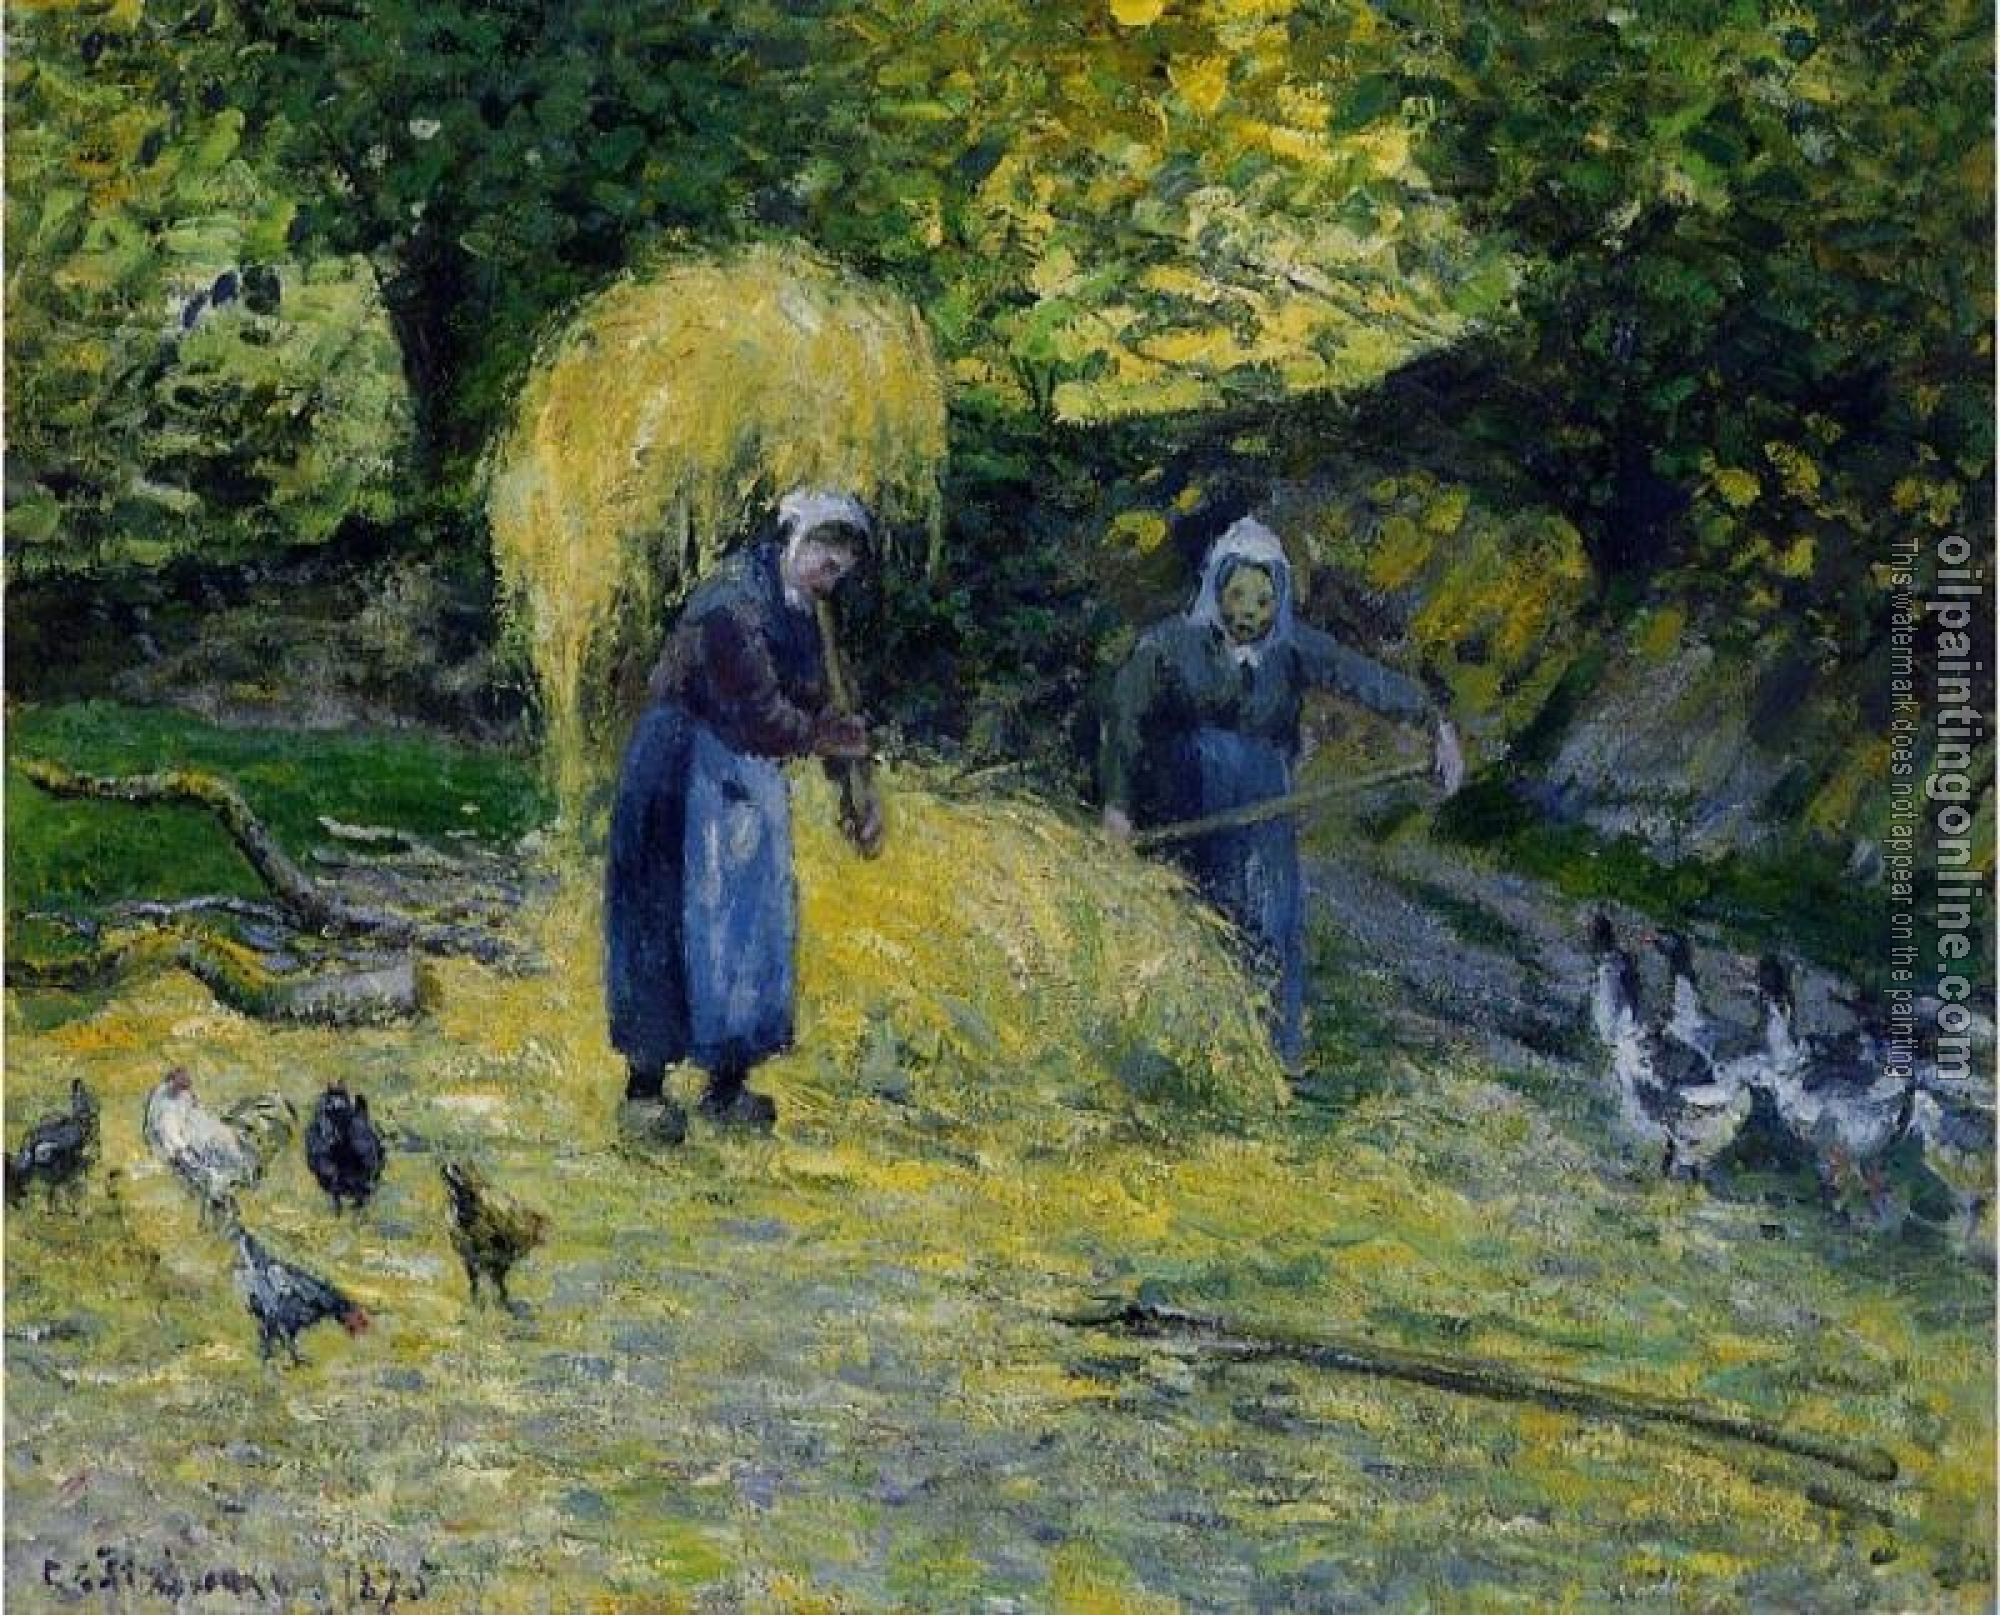 Pissarro, Camille - Peasants Carrying Straw, Montfoucault